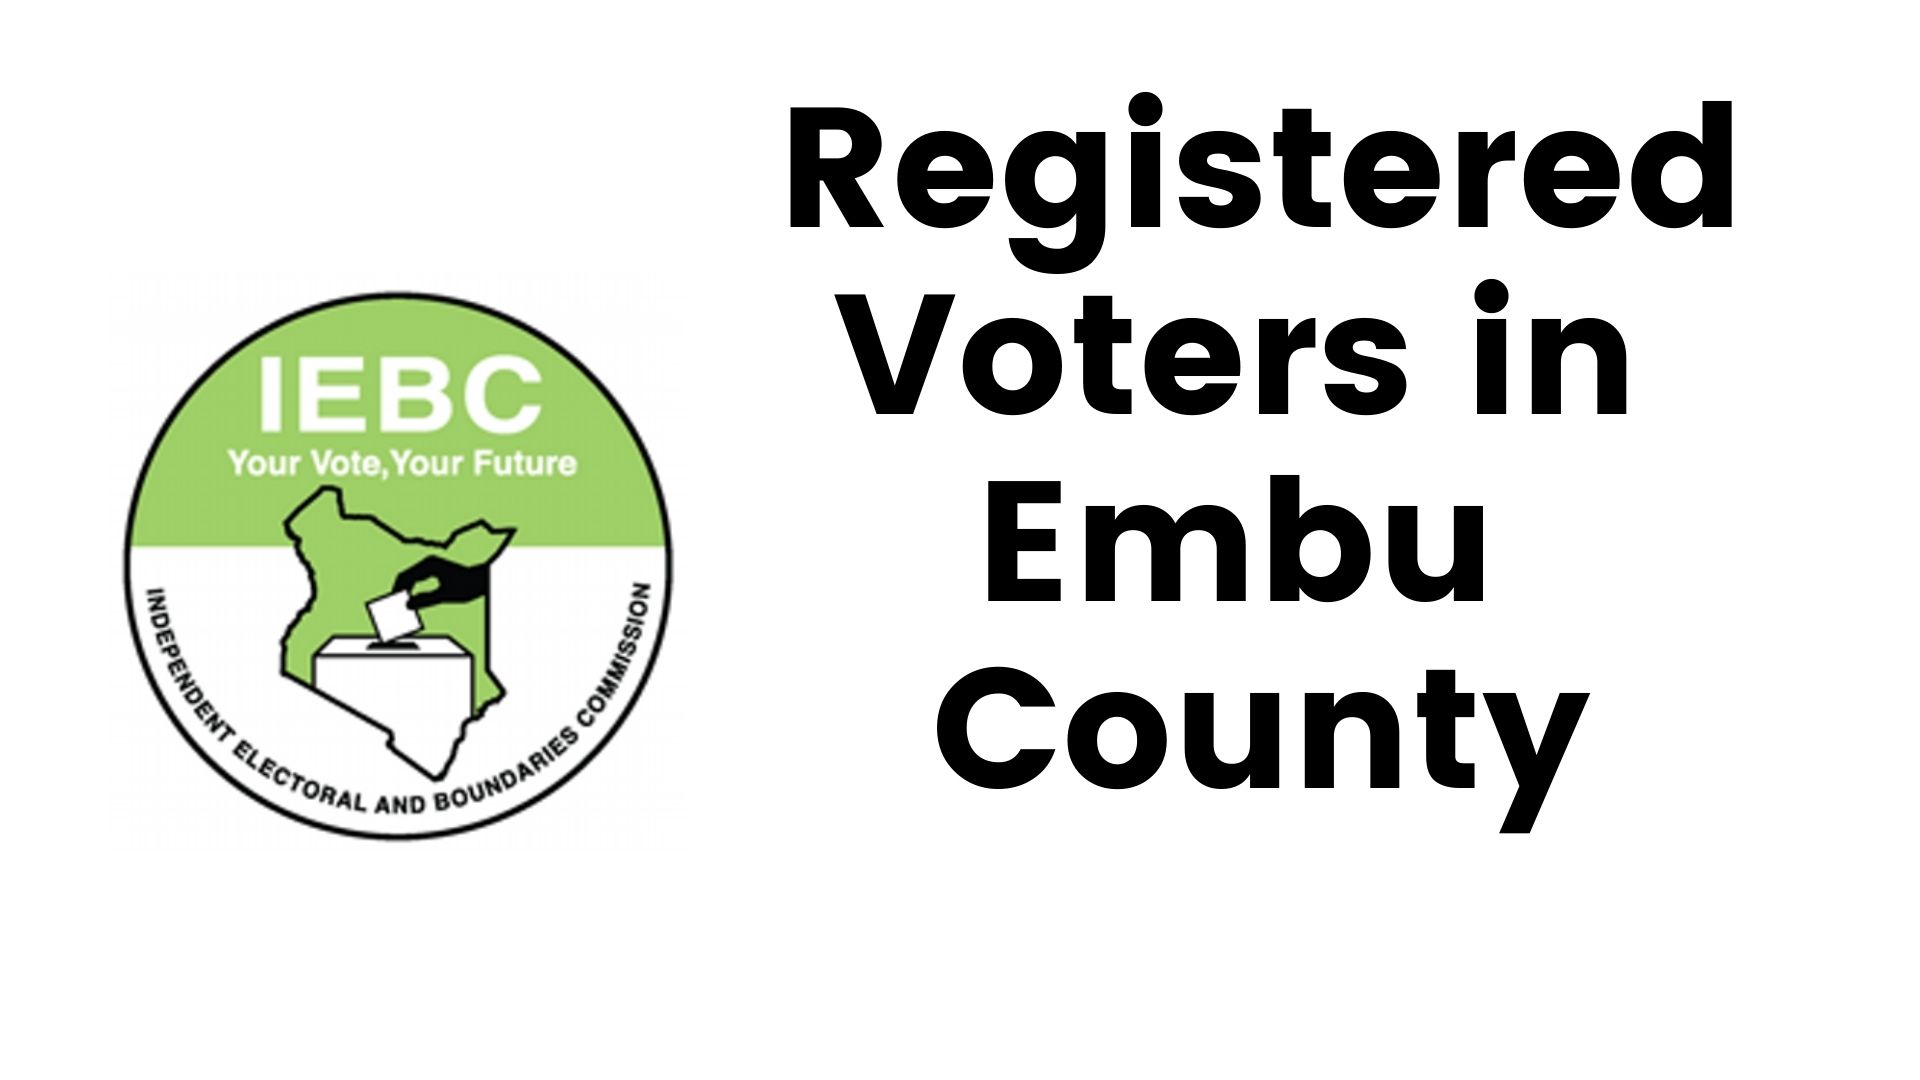 IEBC Embu County Registered Voters